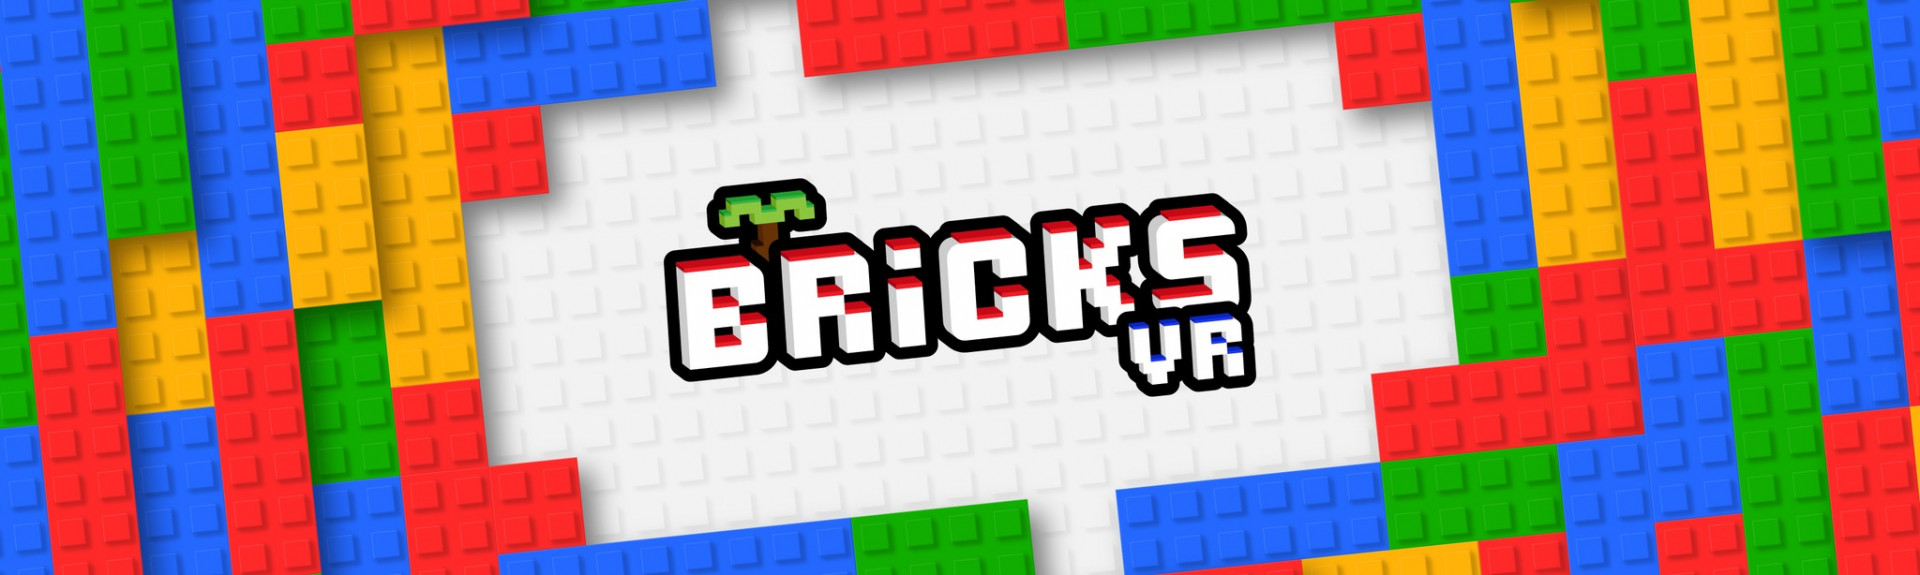 BricksVR - Early Access